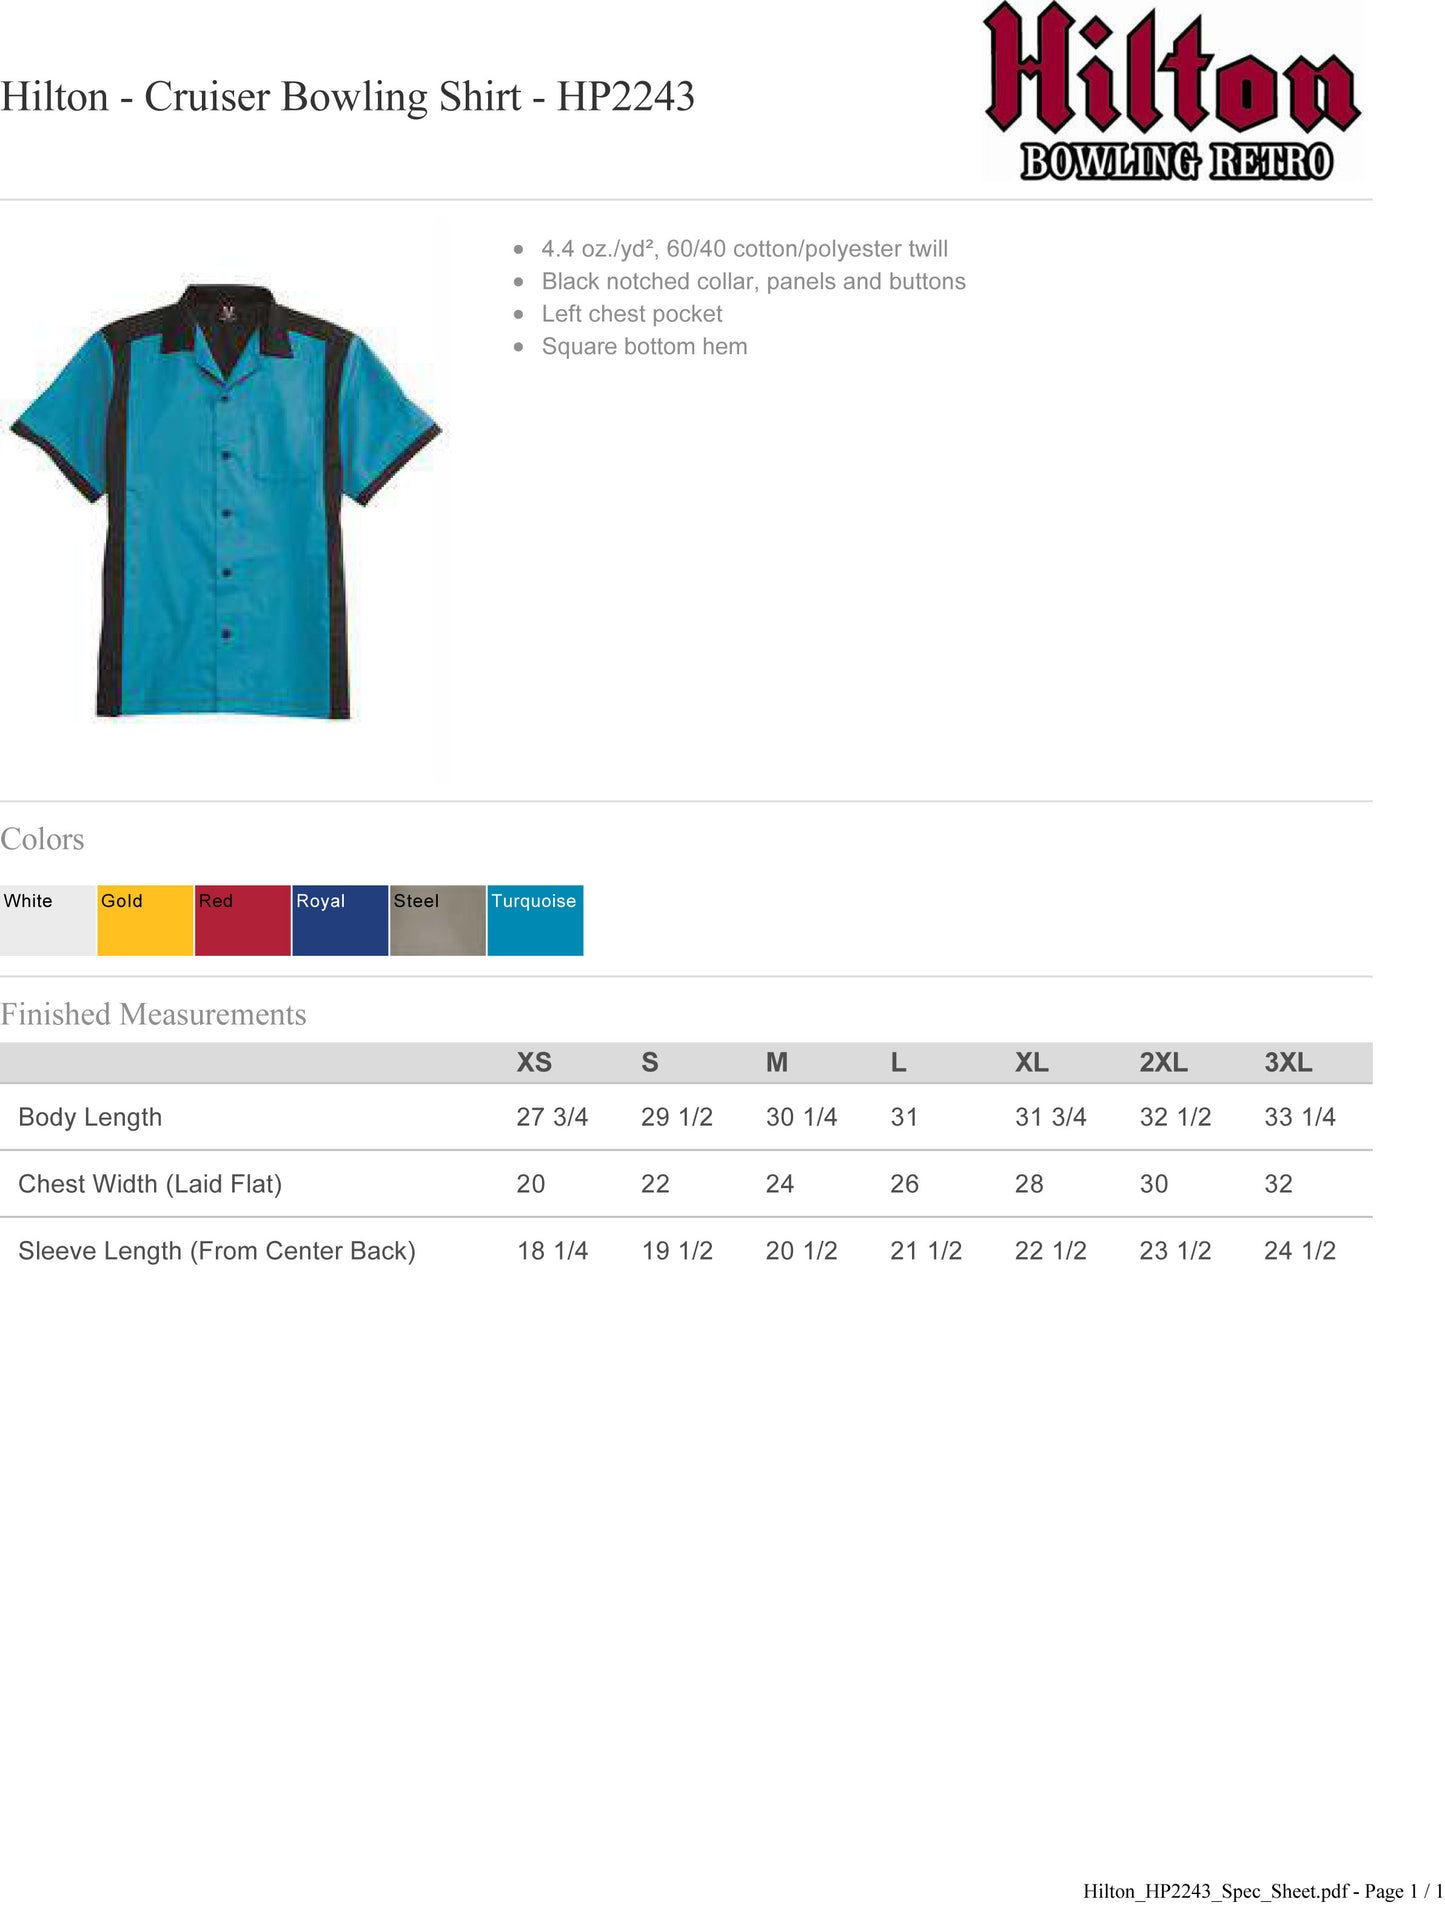 Hilton HP2243 Bowling Shirt Steel Custom Text or Design